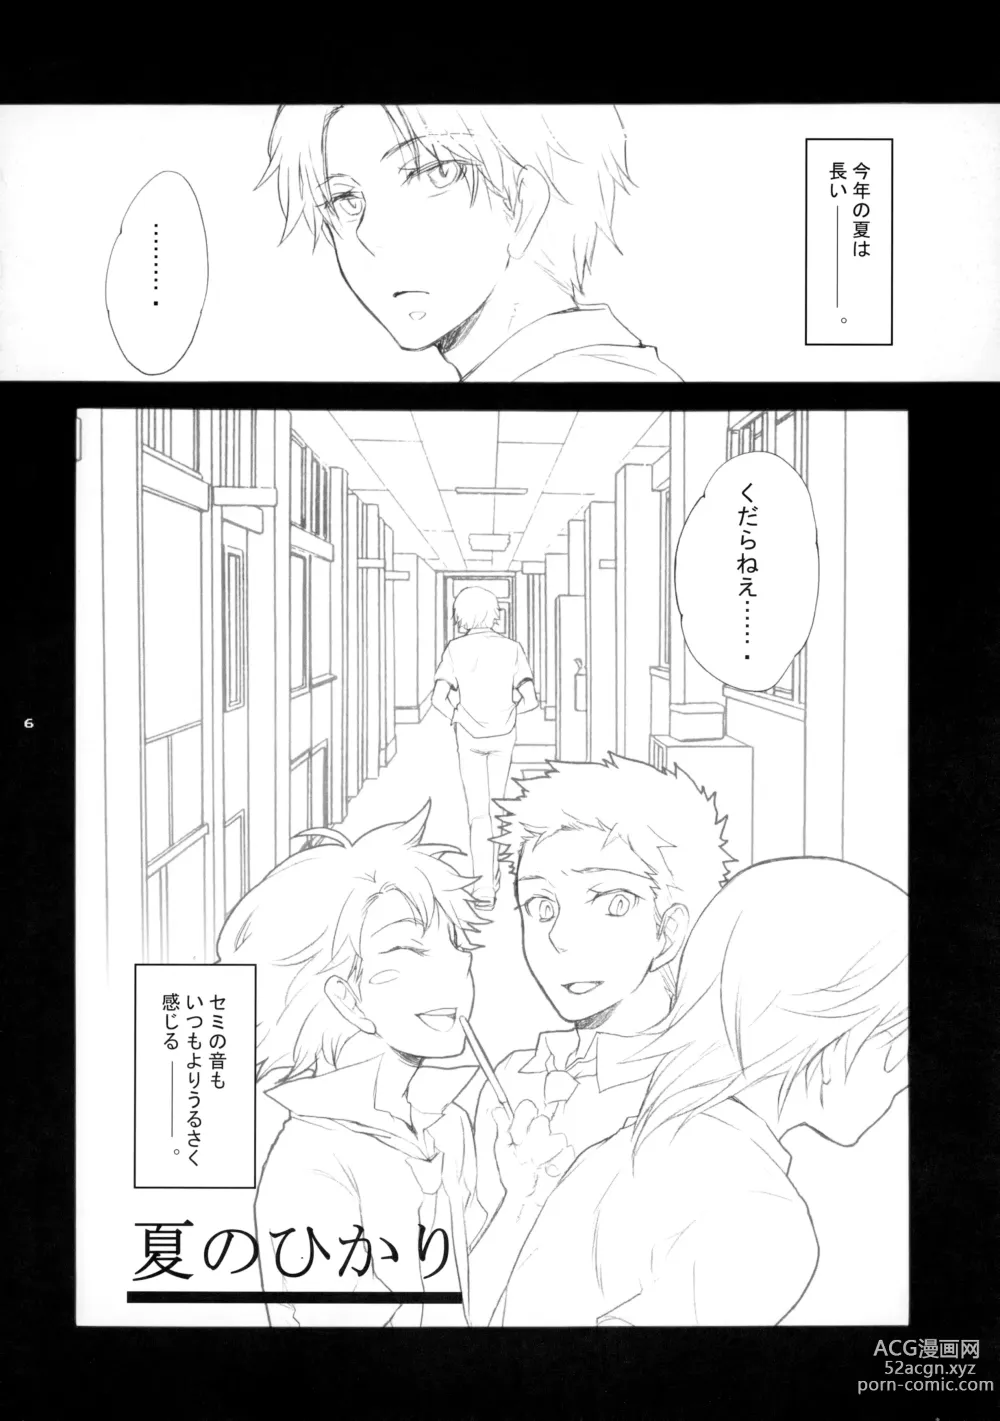 Page 5 of doujinshi 幻視画少年